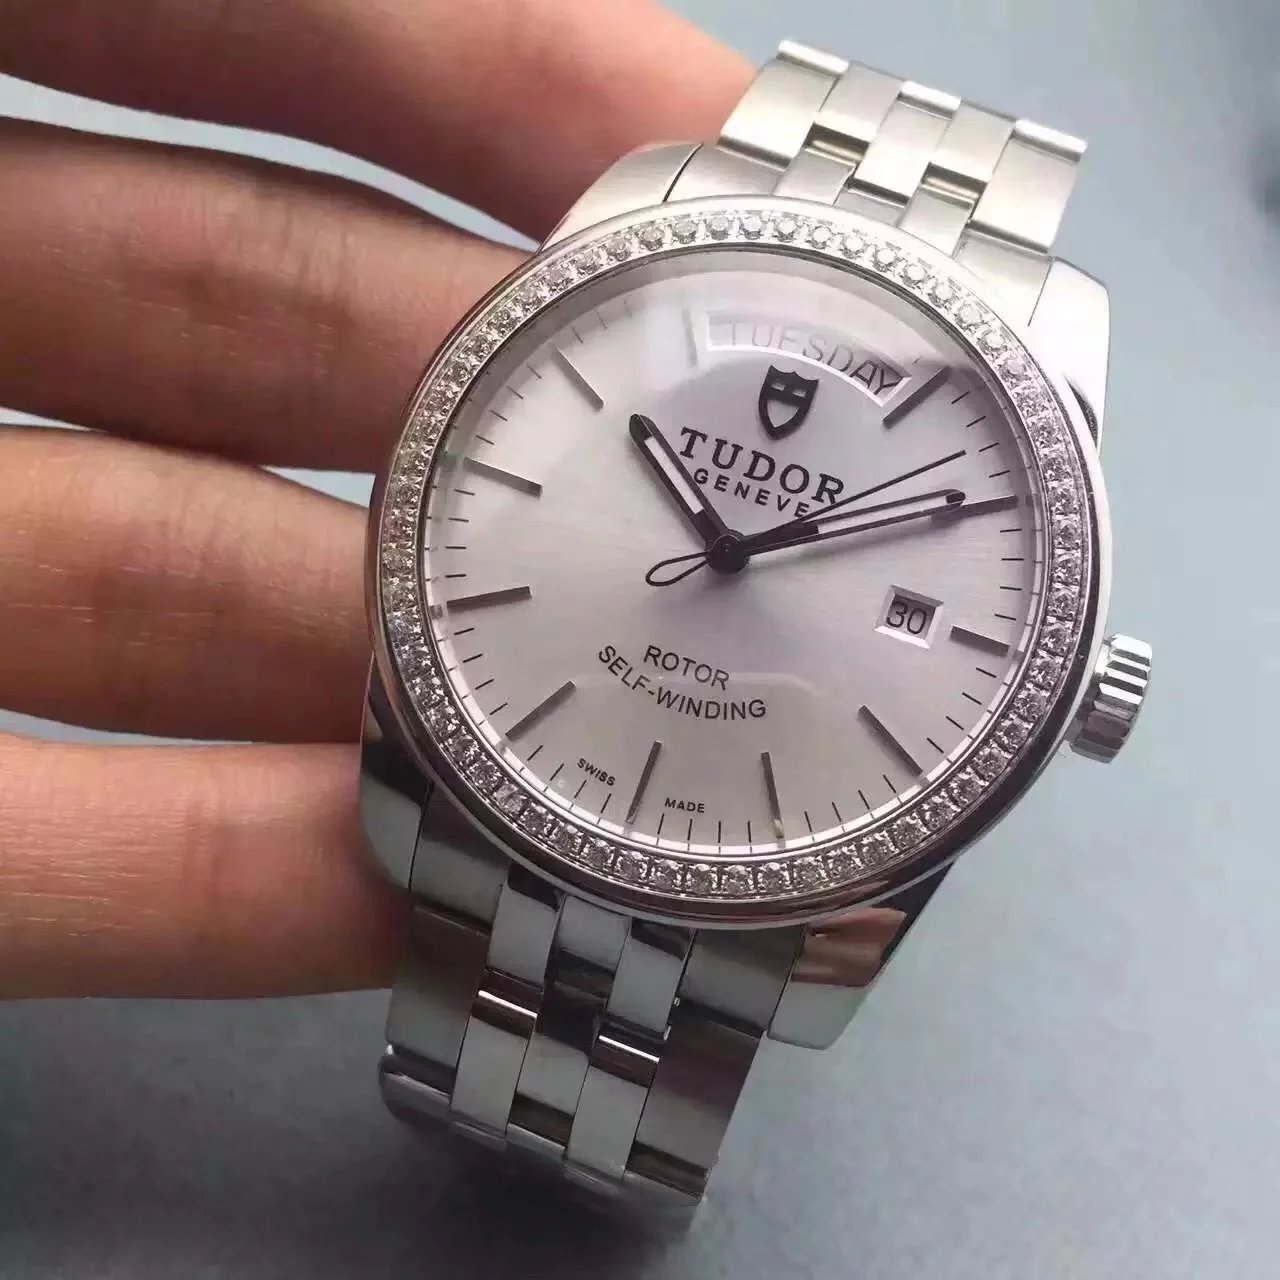 Boutique-Tudor Tudor? Jun Jue series men's mechanical watch white face diamond - Click Image to Close